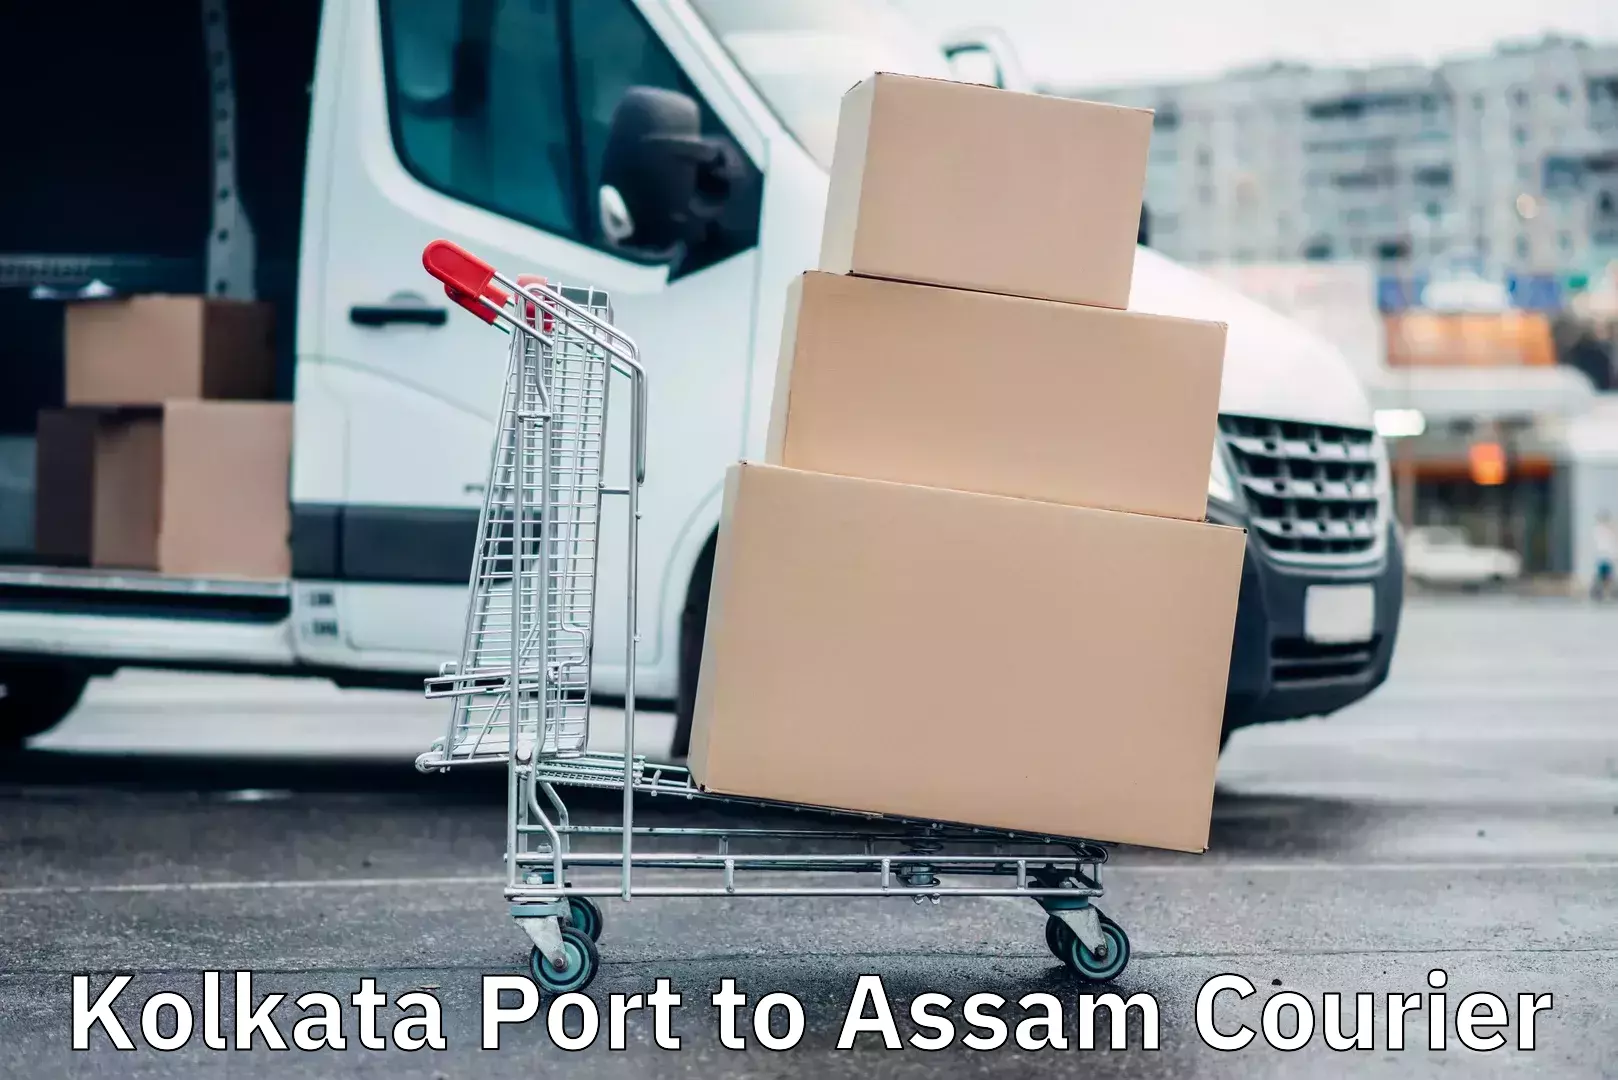 High-performance logistics Kolkata Port to Assam